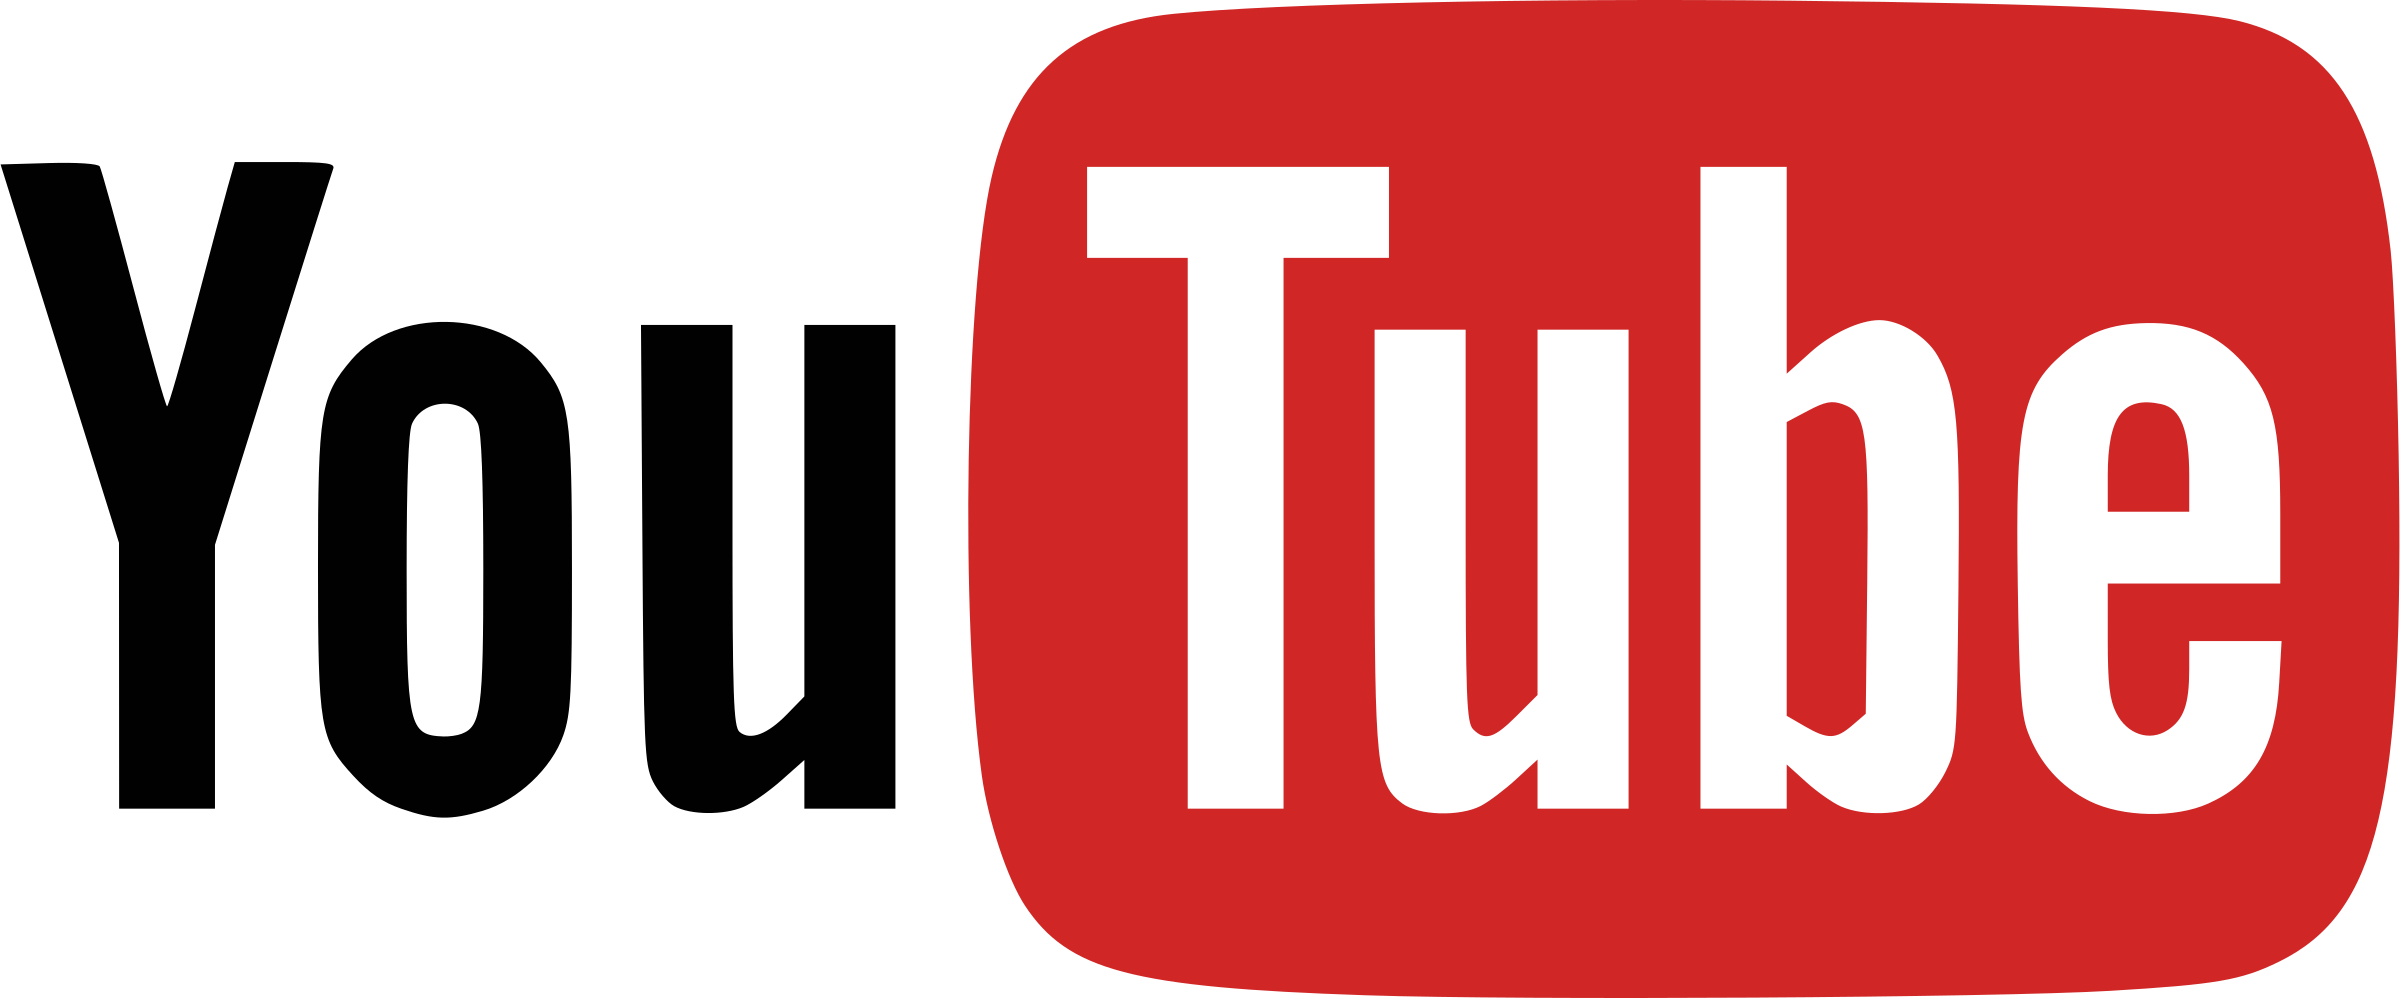 White YouTube Logo - YouTube Logo PNG Transparent & SVG Vector - Freebie Supply